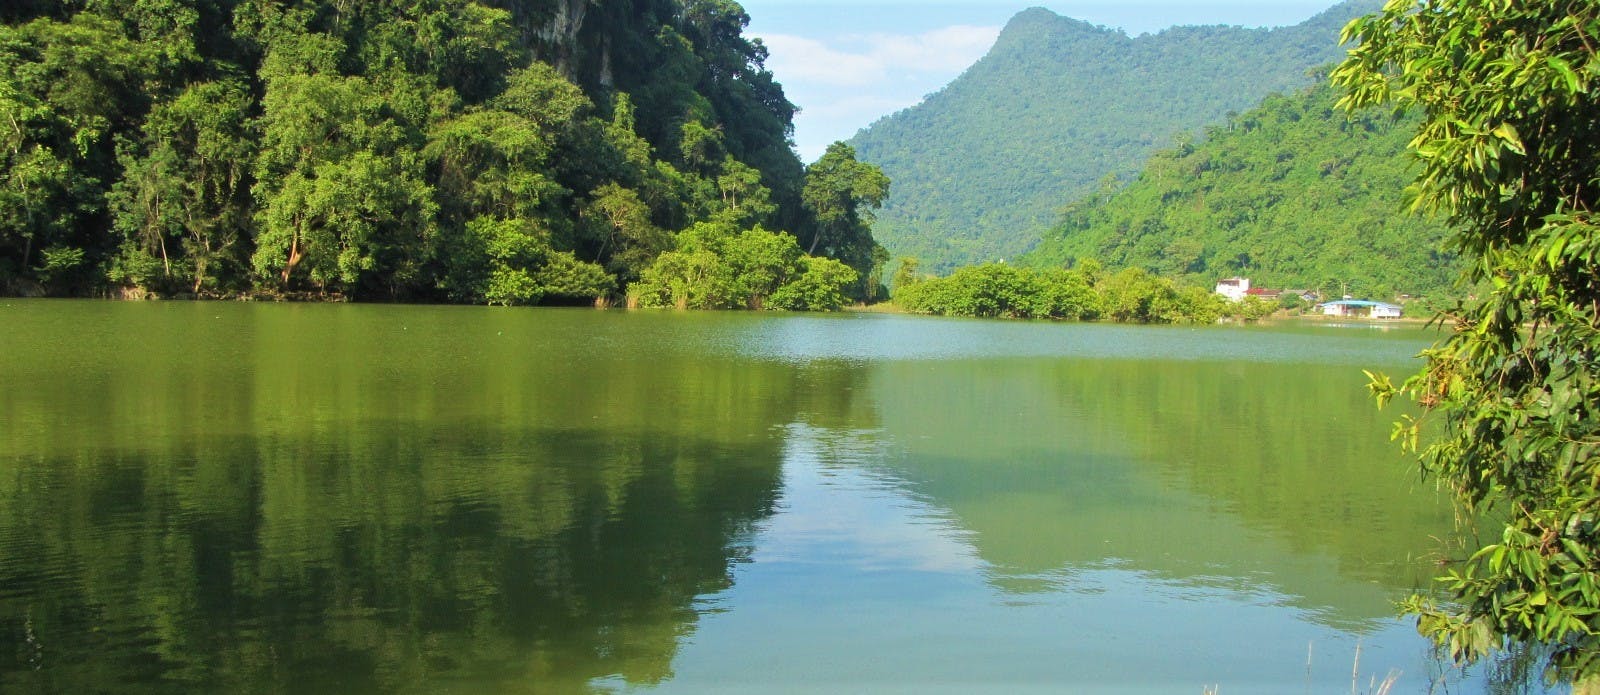 Ba Be Lake homestays, Bac Kan Province, Vietnam